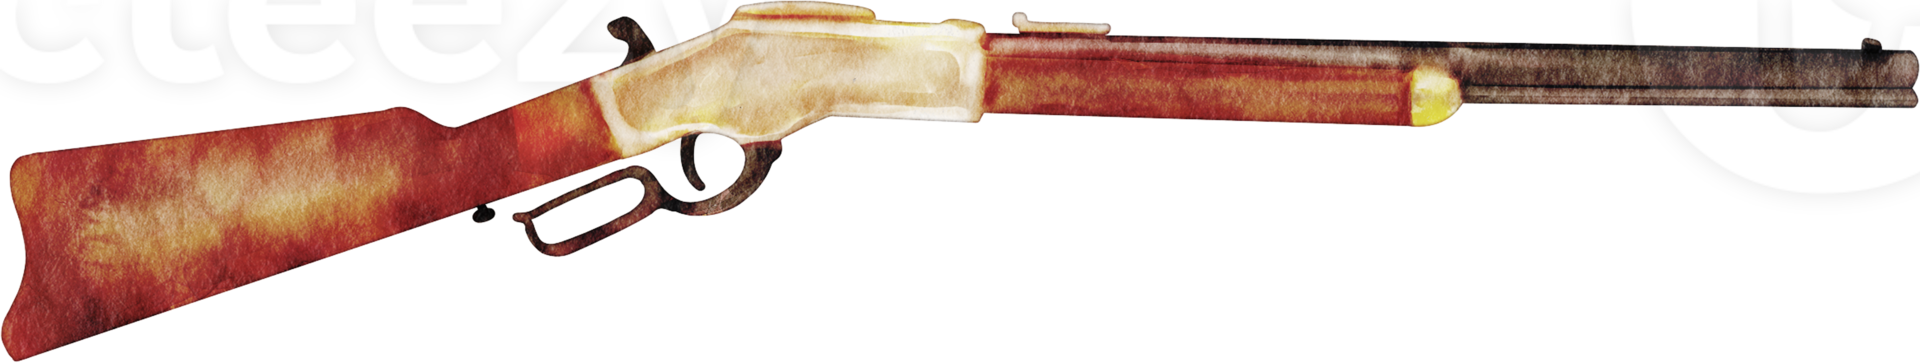 watercolor cowboy gun png